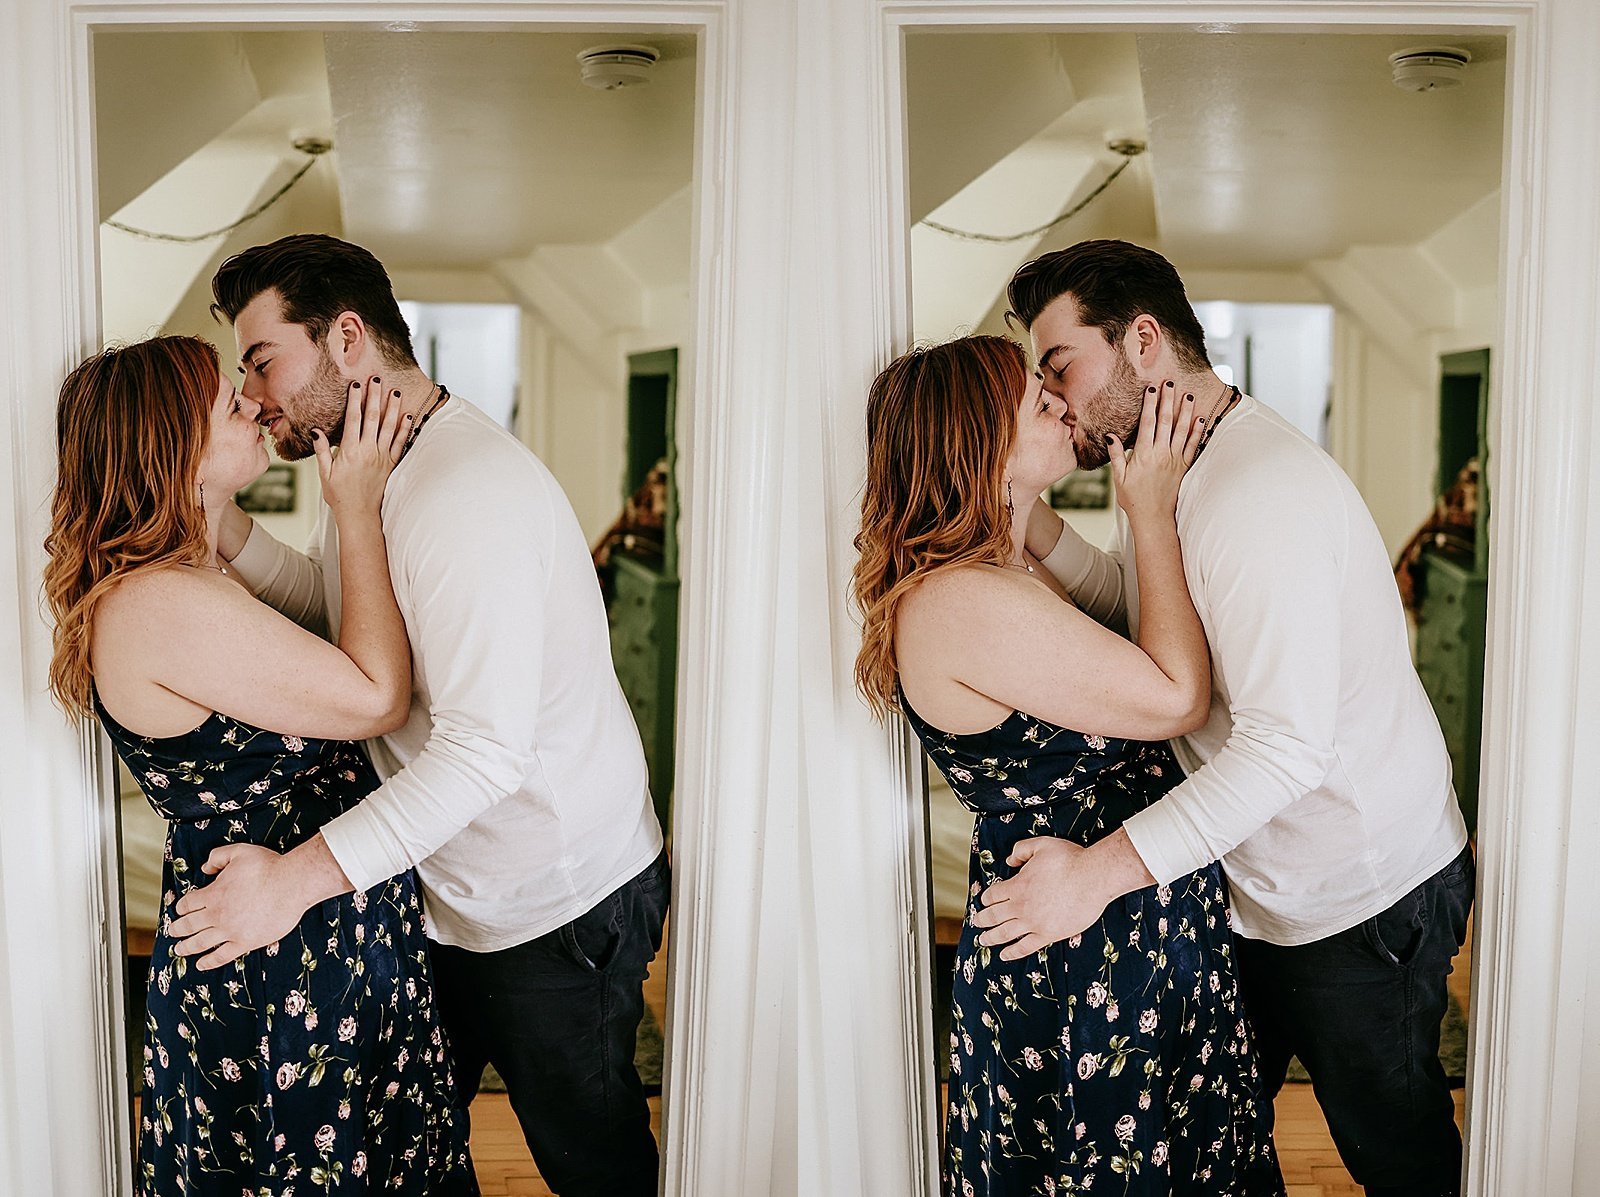  Man kissing woman against a door frame by Minneapolis photographer McKenzie Berquam  